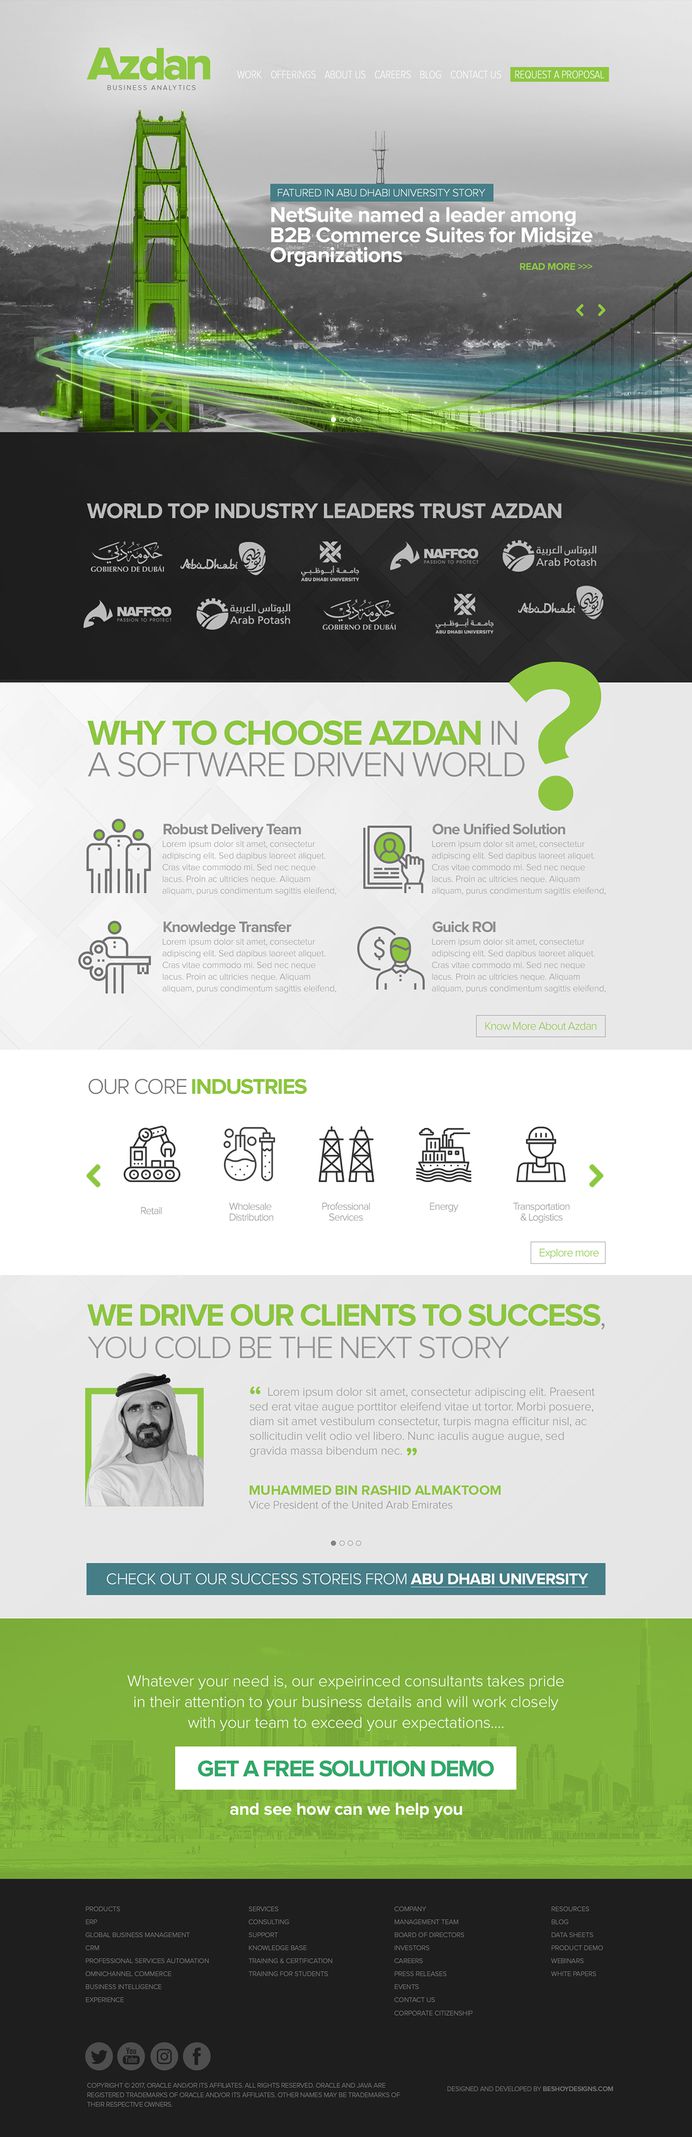 Azdan / Website Design and Development on Behance